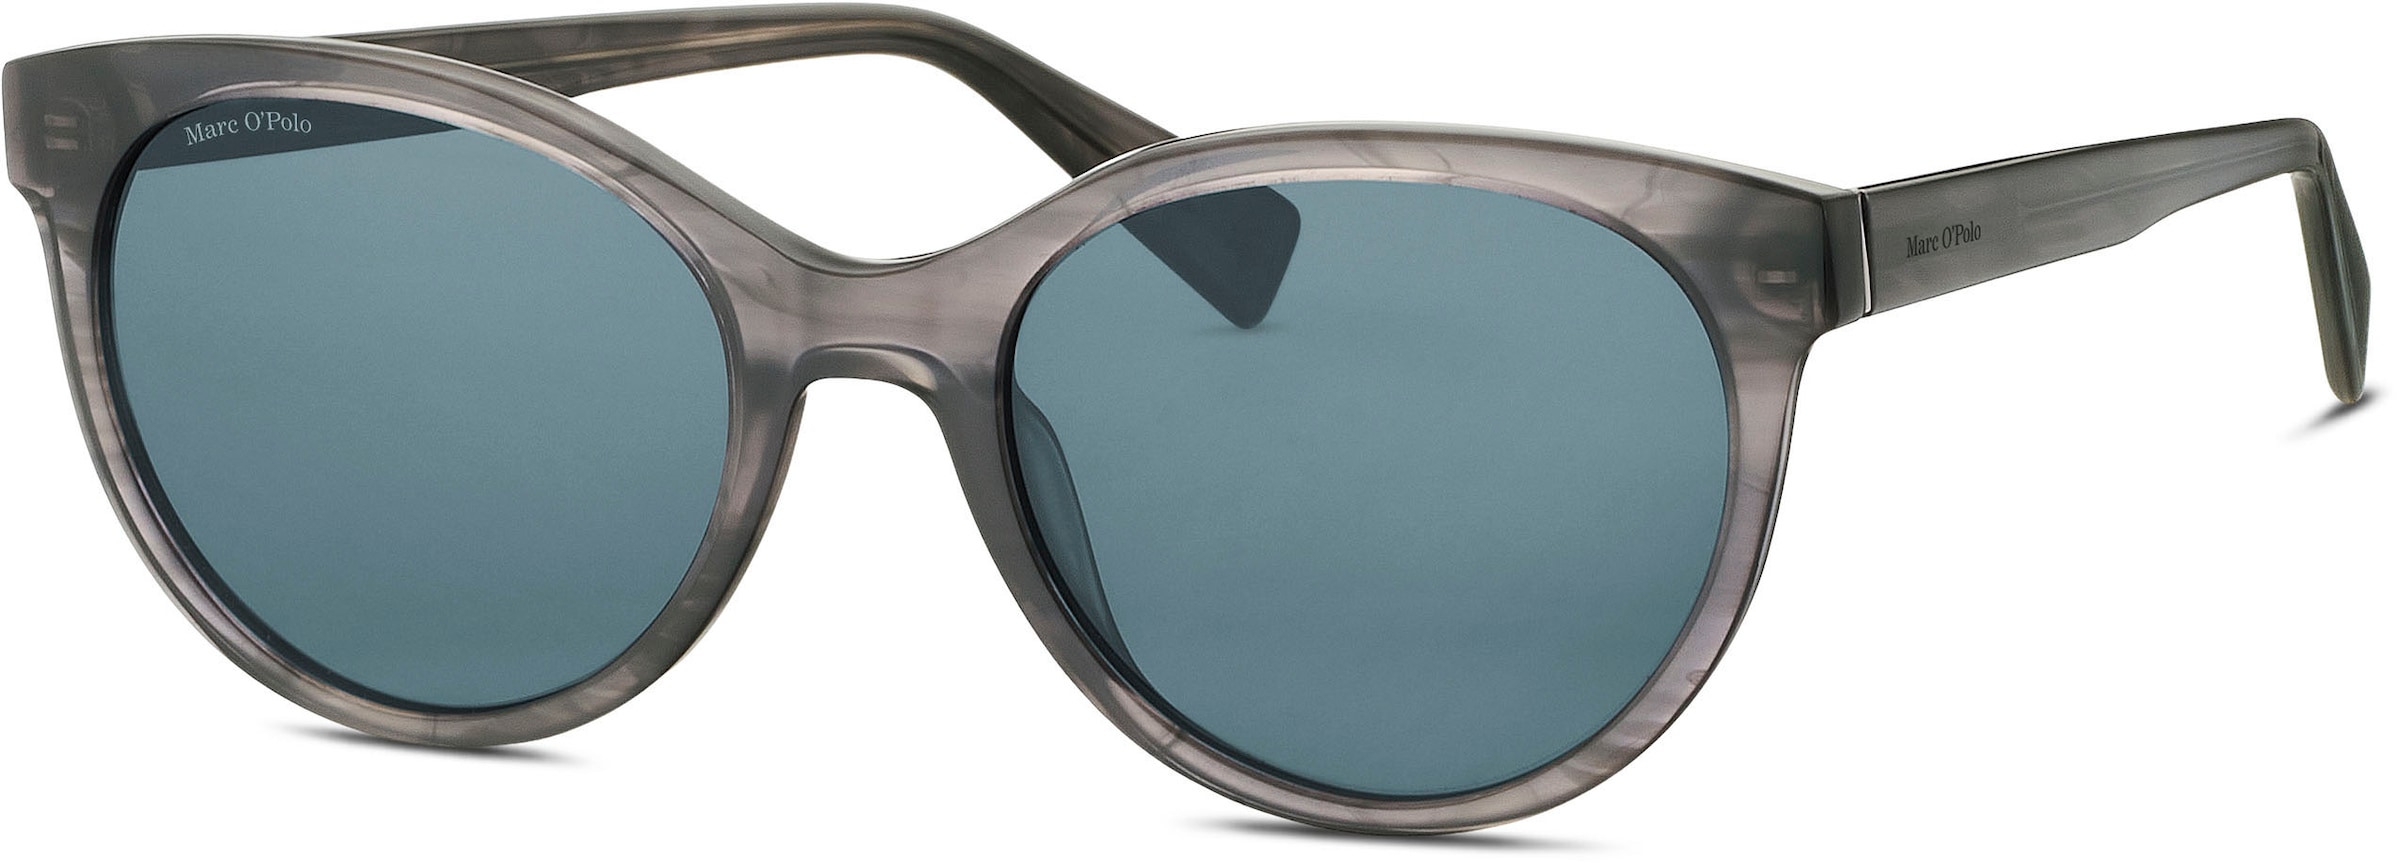 Marc O'Polo Sonnenbrille »Modell 506193« bei